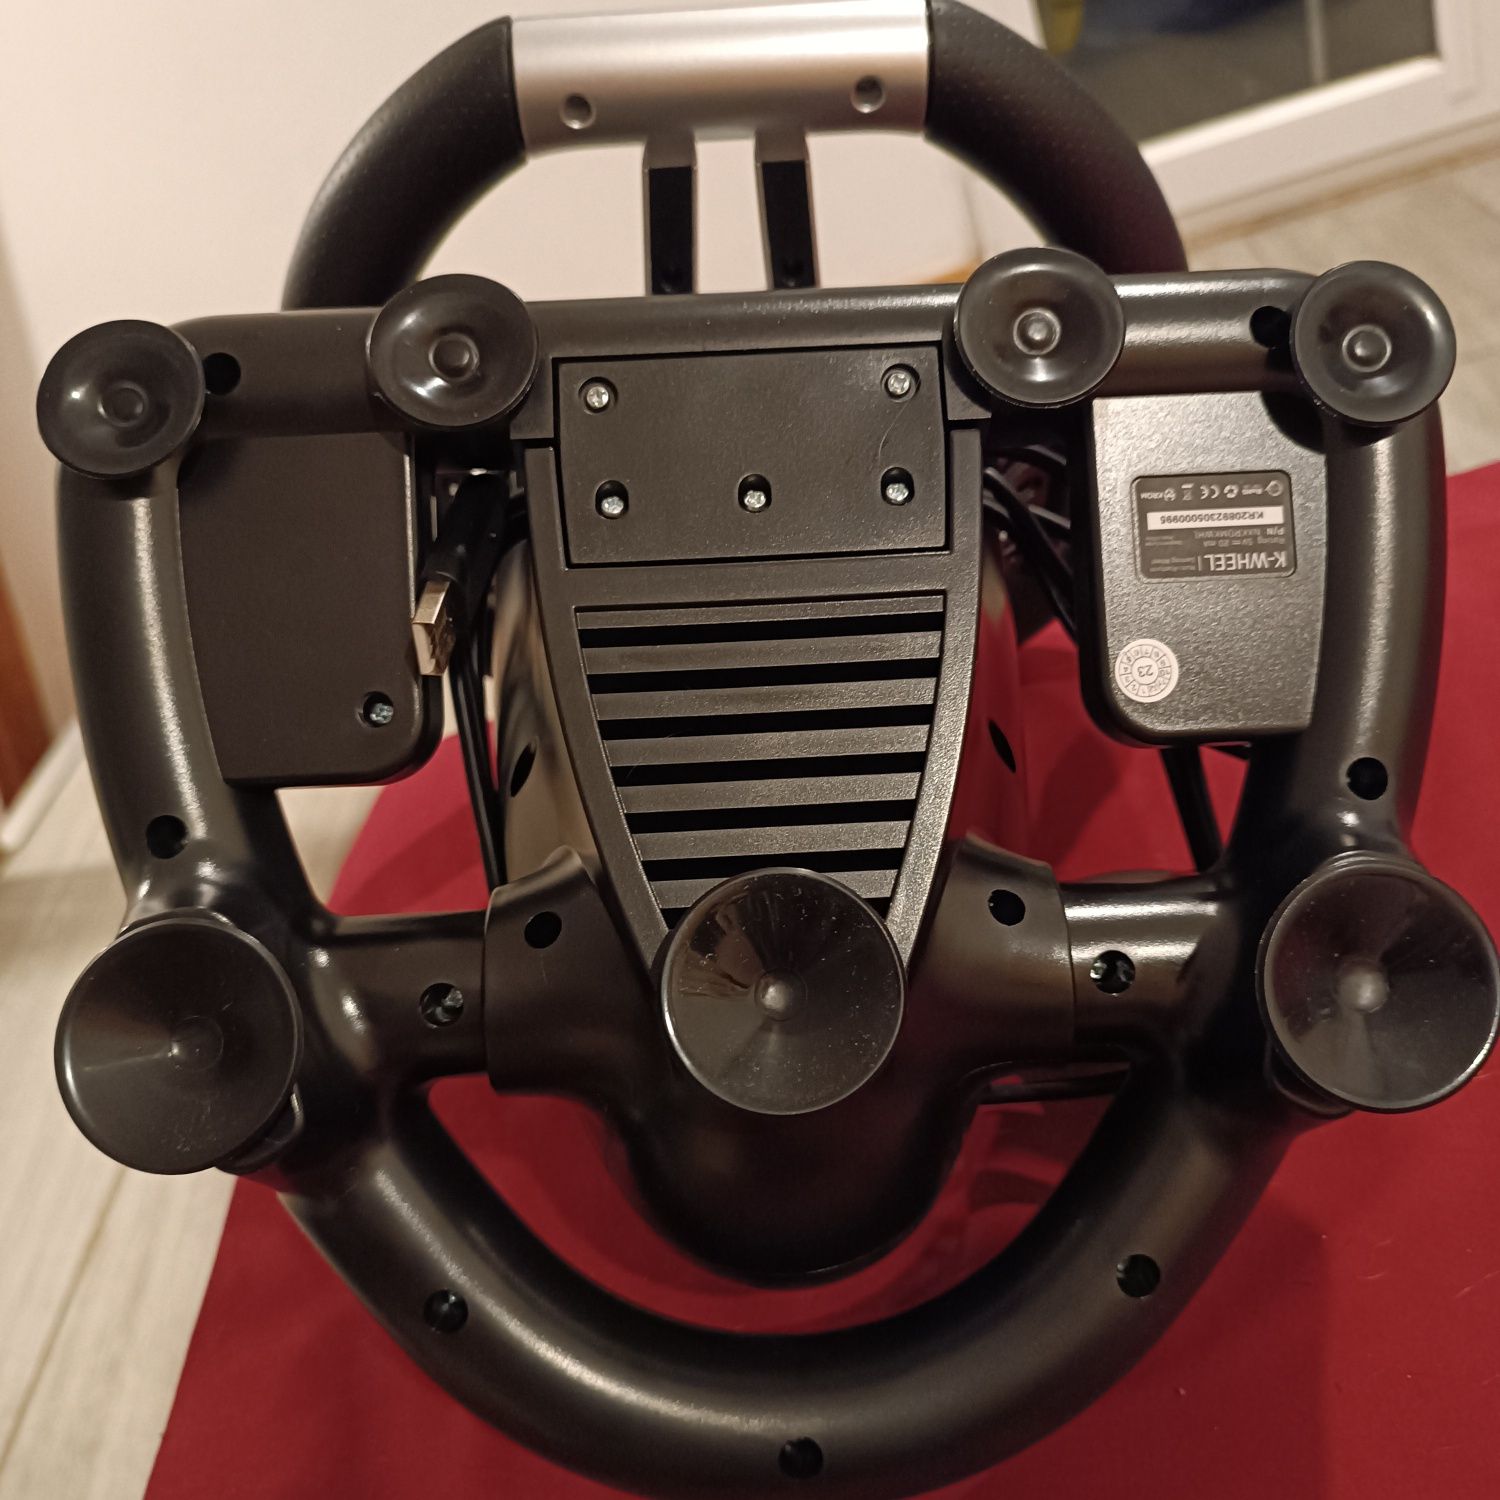 Volante Krom K-wheel